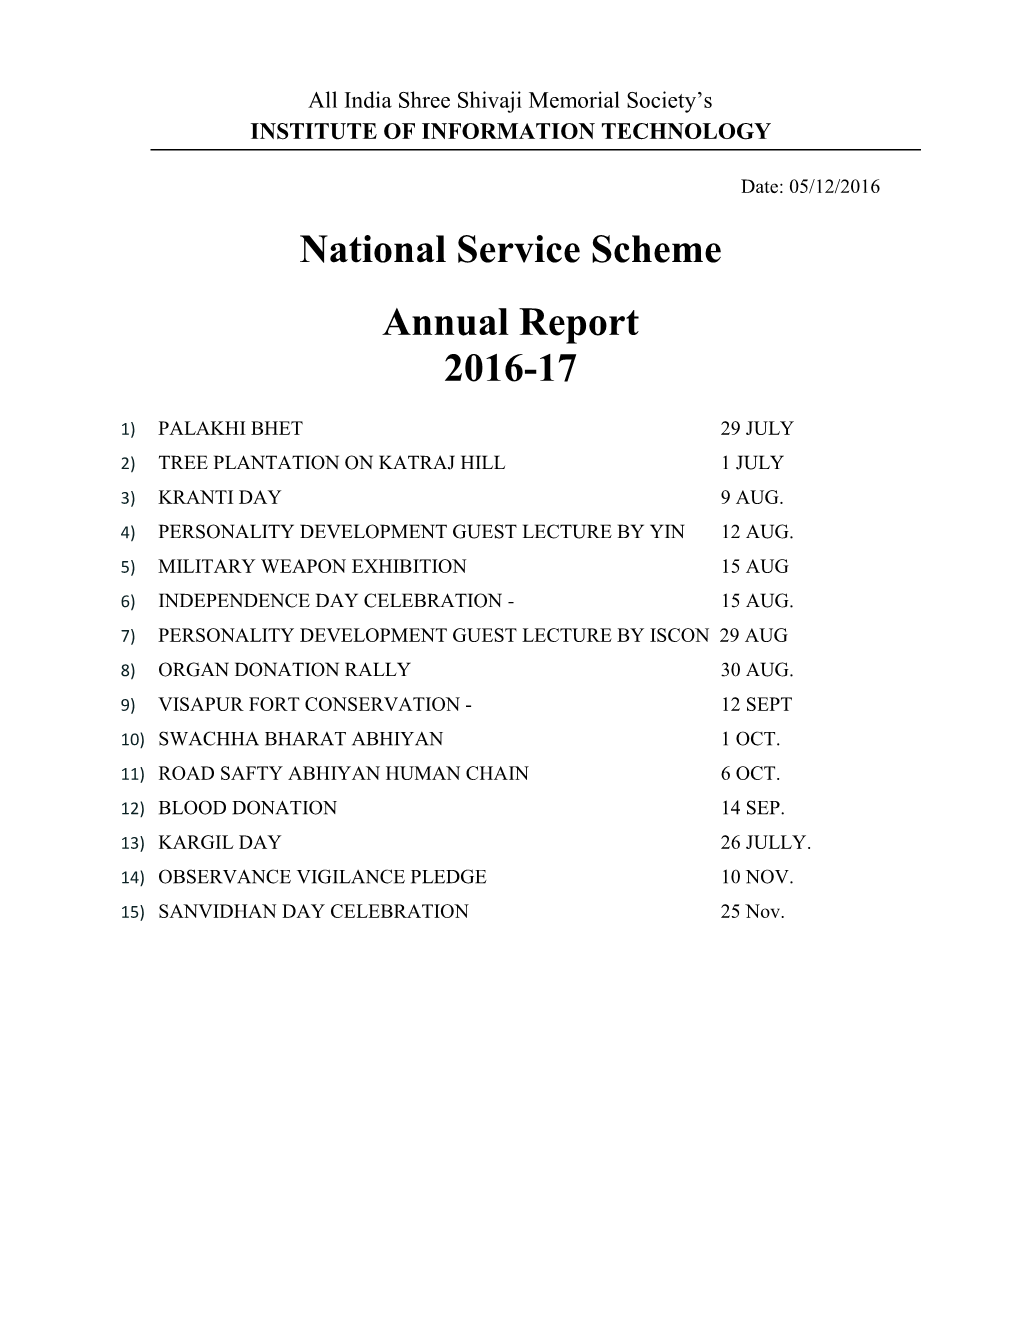 National Service Scheme Annual Report 2016-17